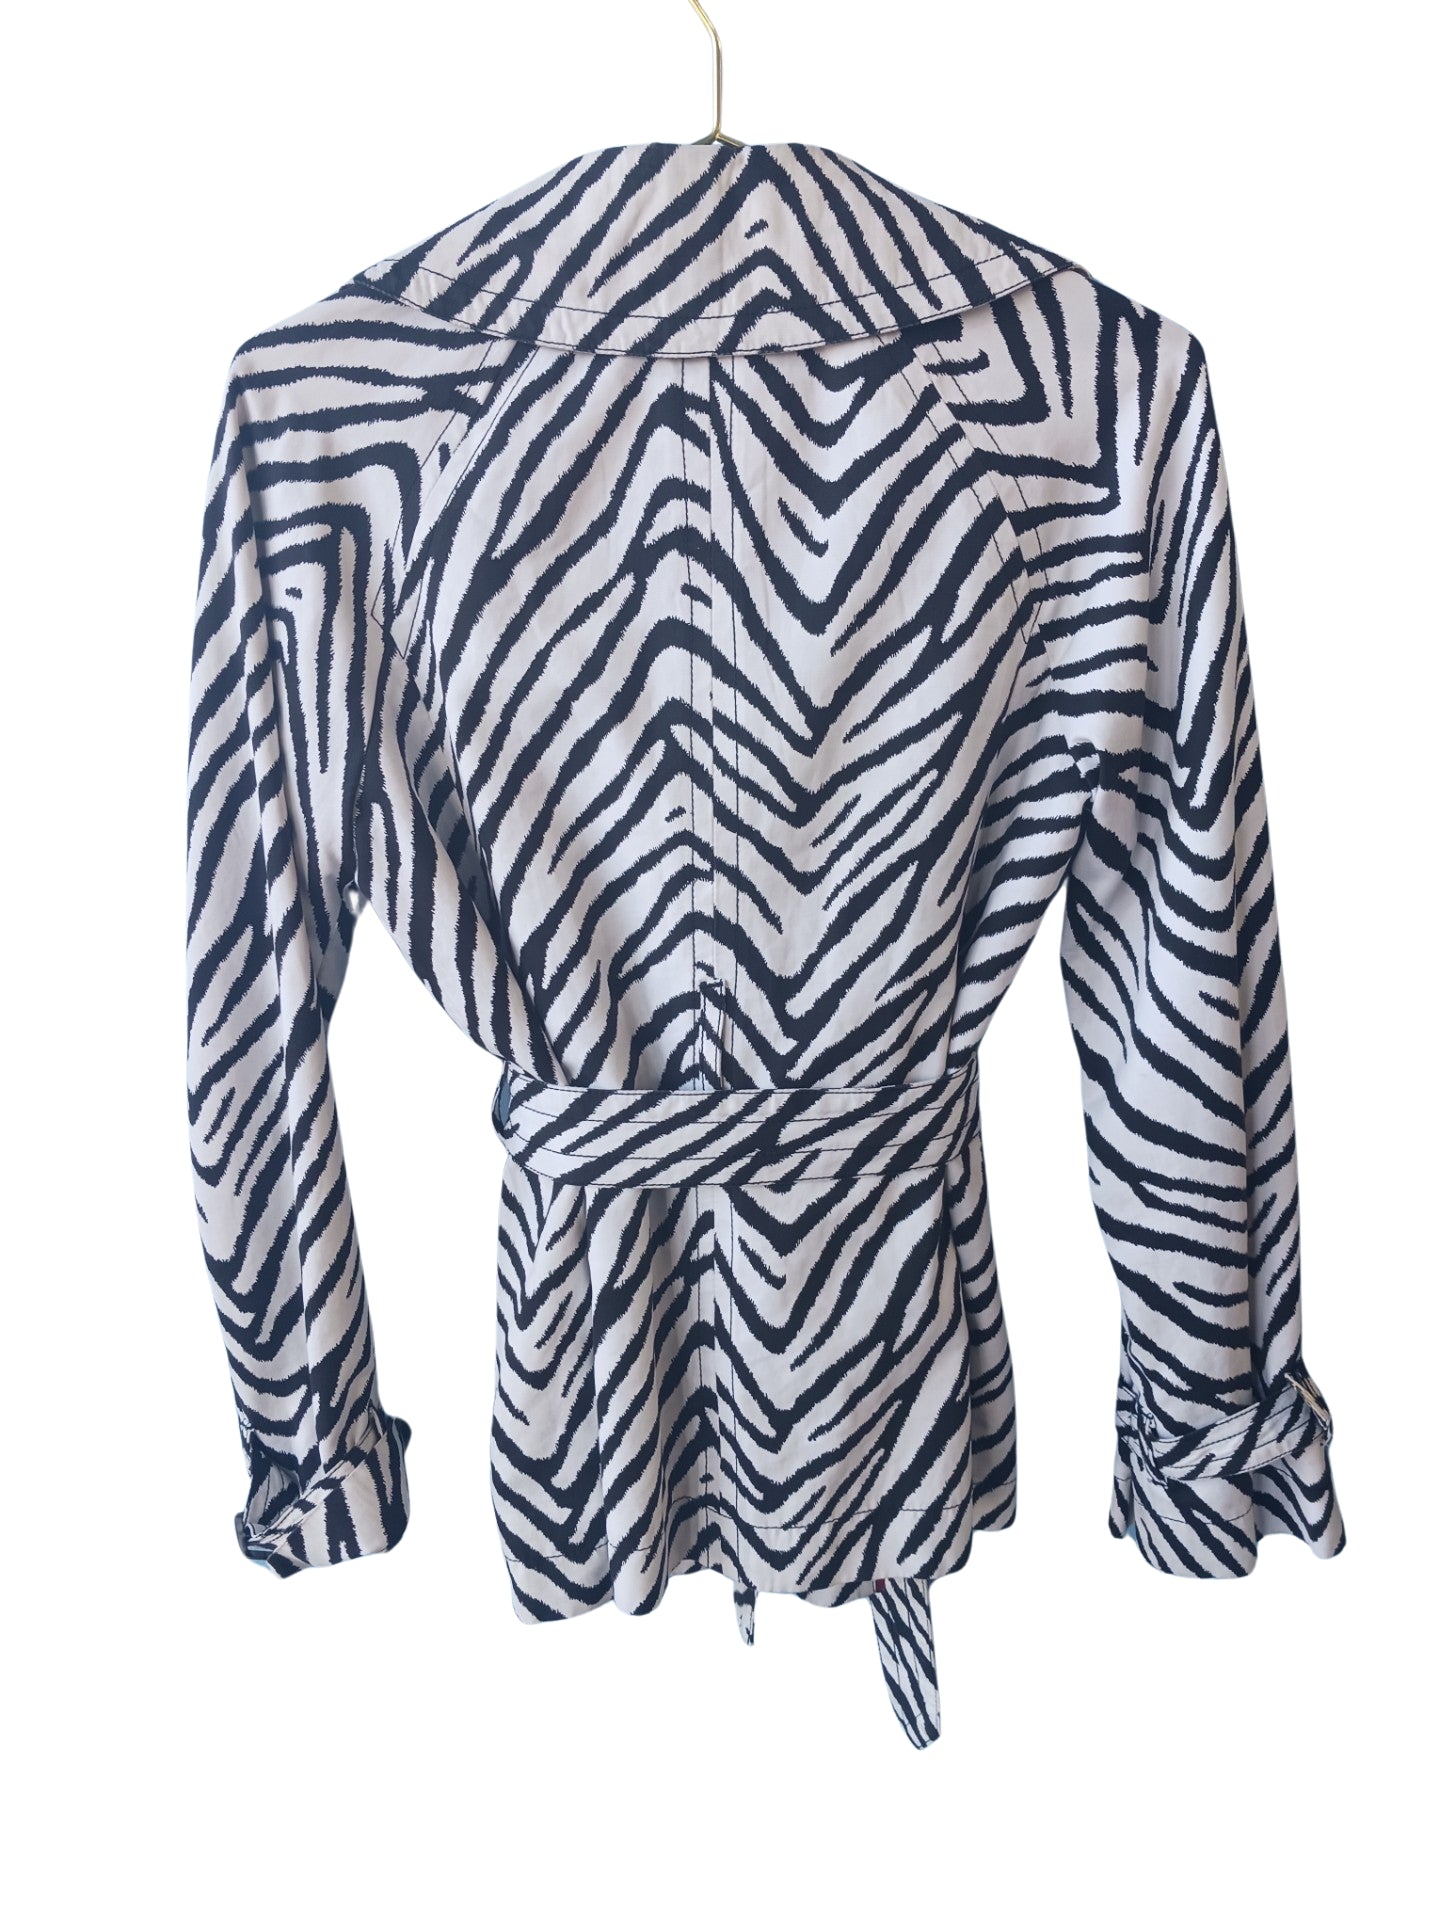 Fillmore Studio California Zebra Jacket, Size Medium